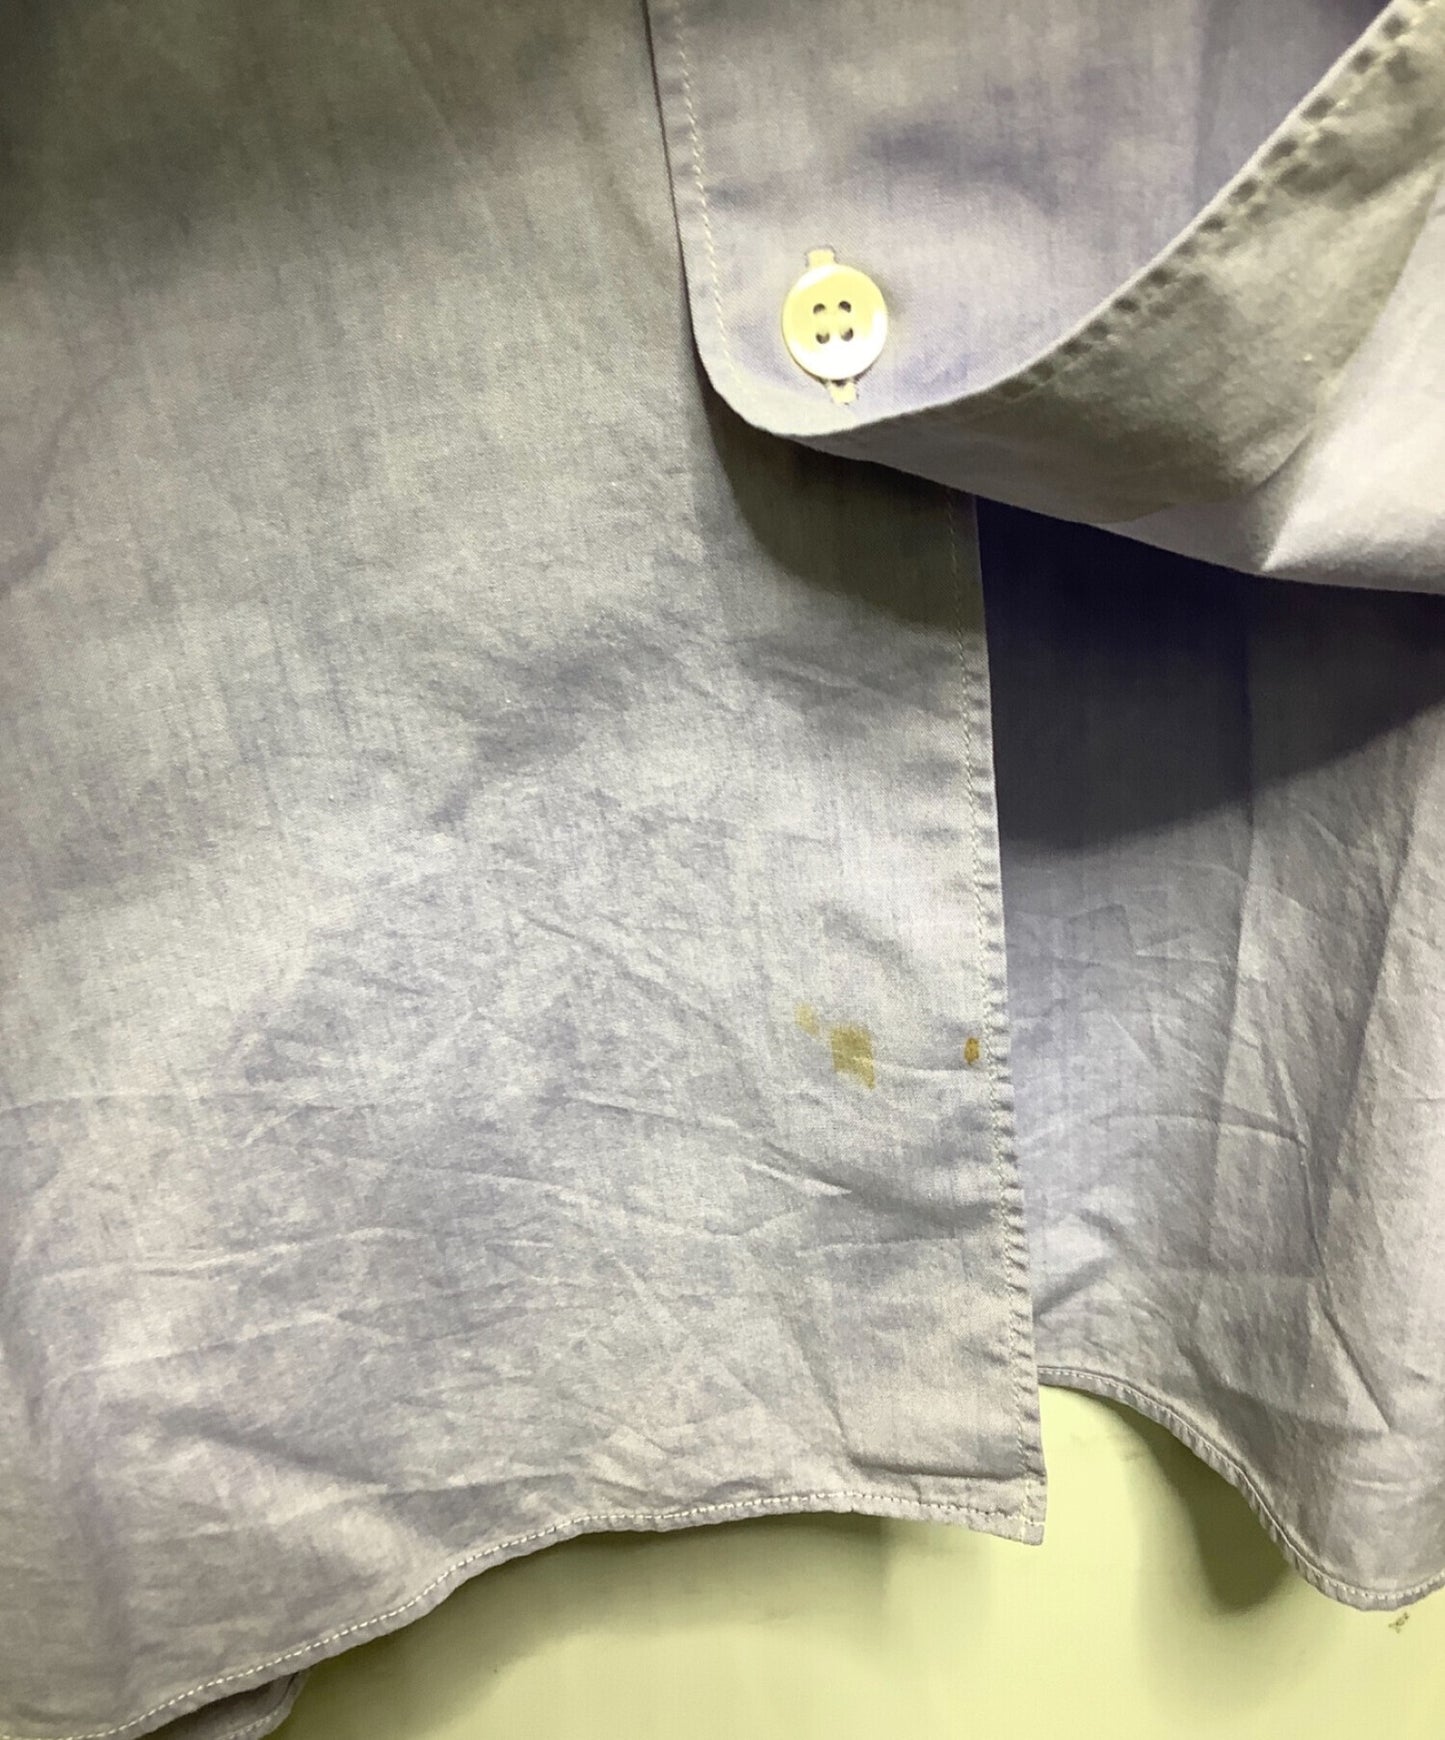 [Pre-owned] COMME des GARCONS HOMME Cotton Broad Shirt HC-B118